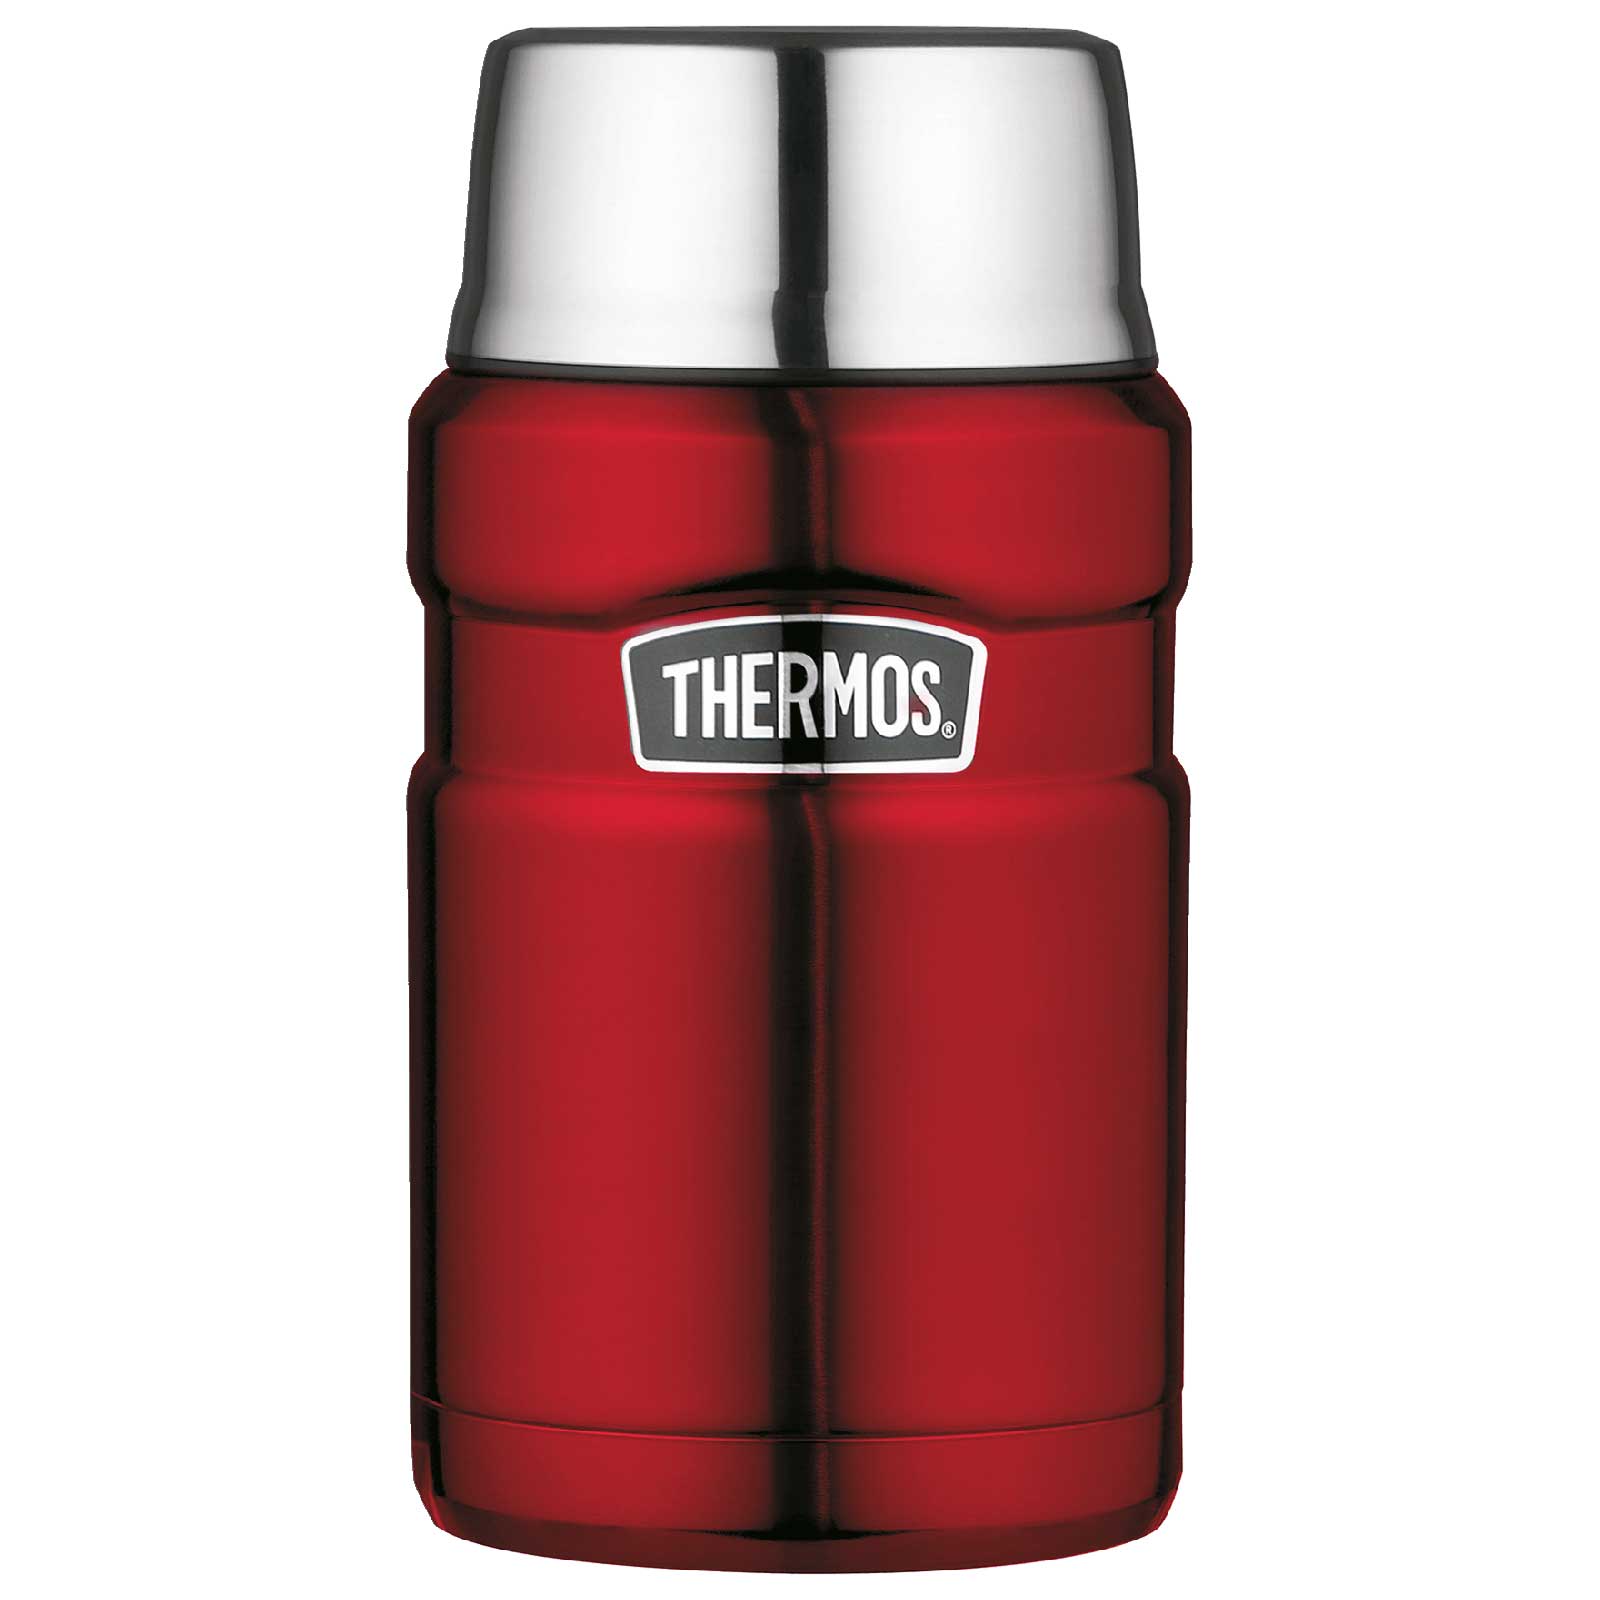 Produktbild von THERMOS® Stainless King Food Jar 0.71L Isolier-Speisegefäß - cranberry red polished